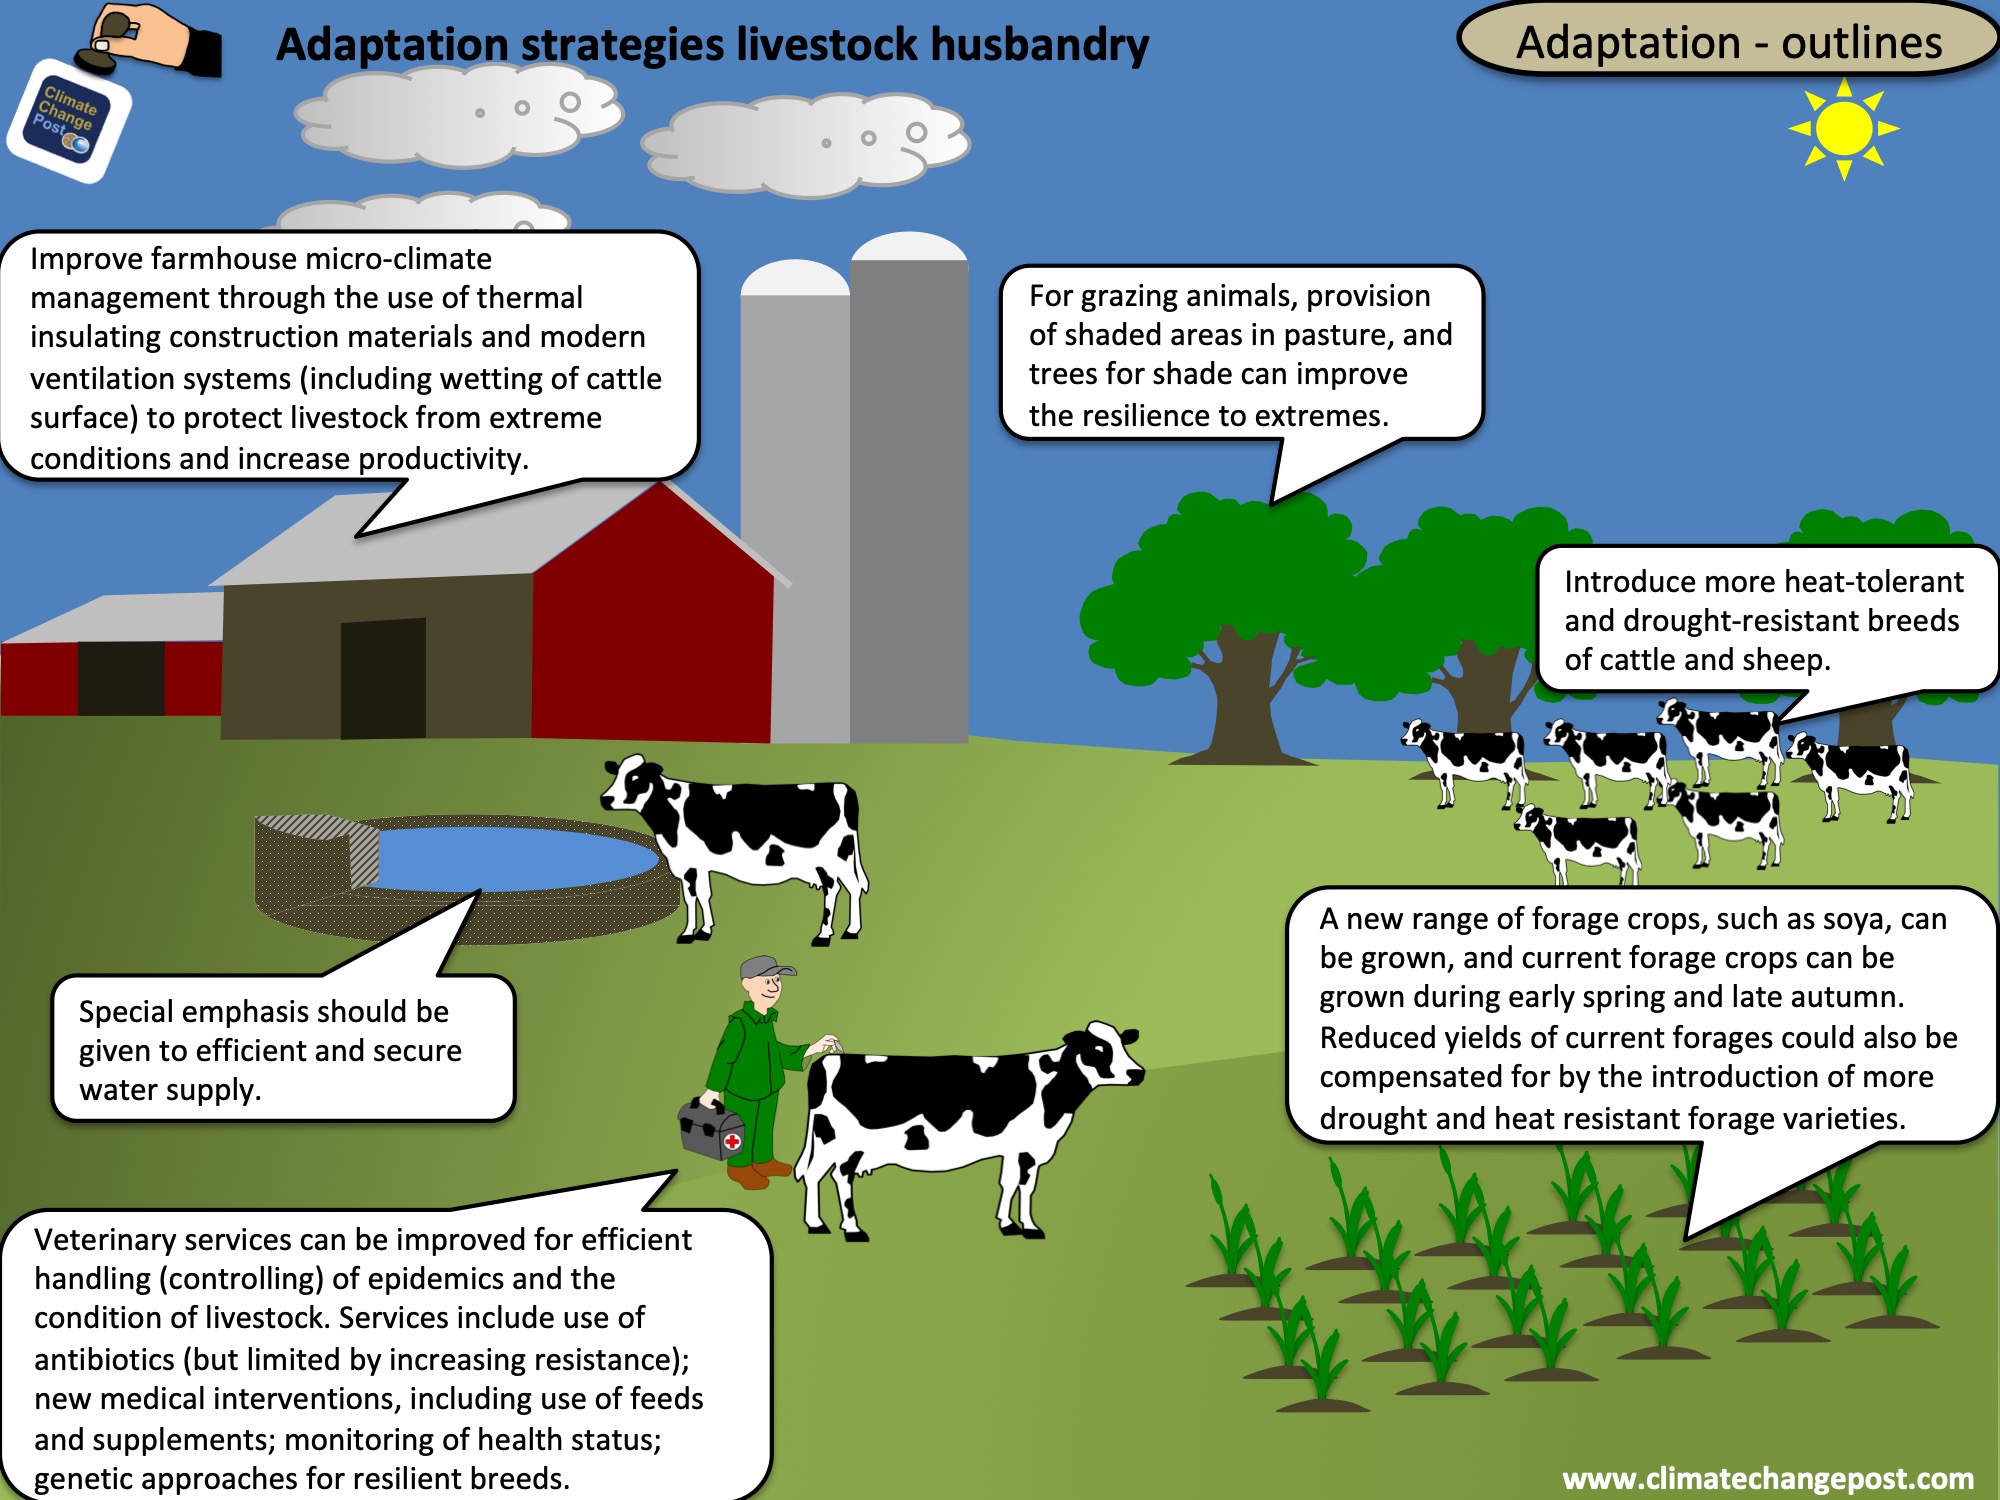 Agriculture Part 4 Adaptation - Slideshows 